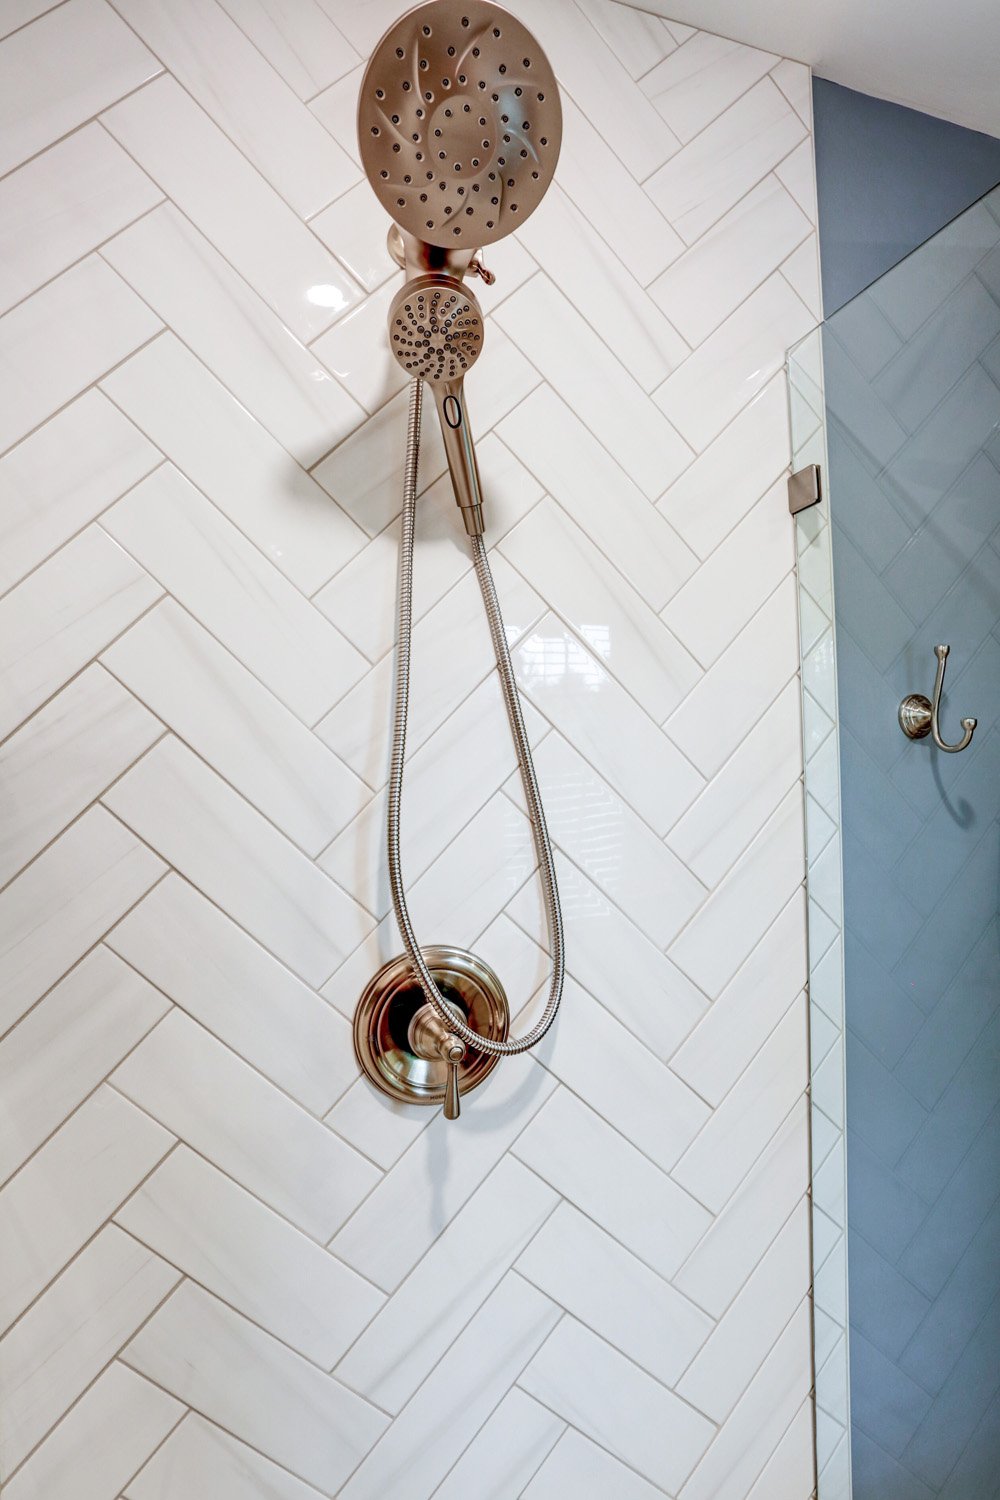 Stainless Steel Shower Head in Conestoga Valley Master Bathroom Remodel